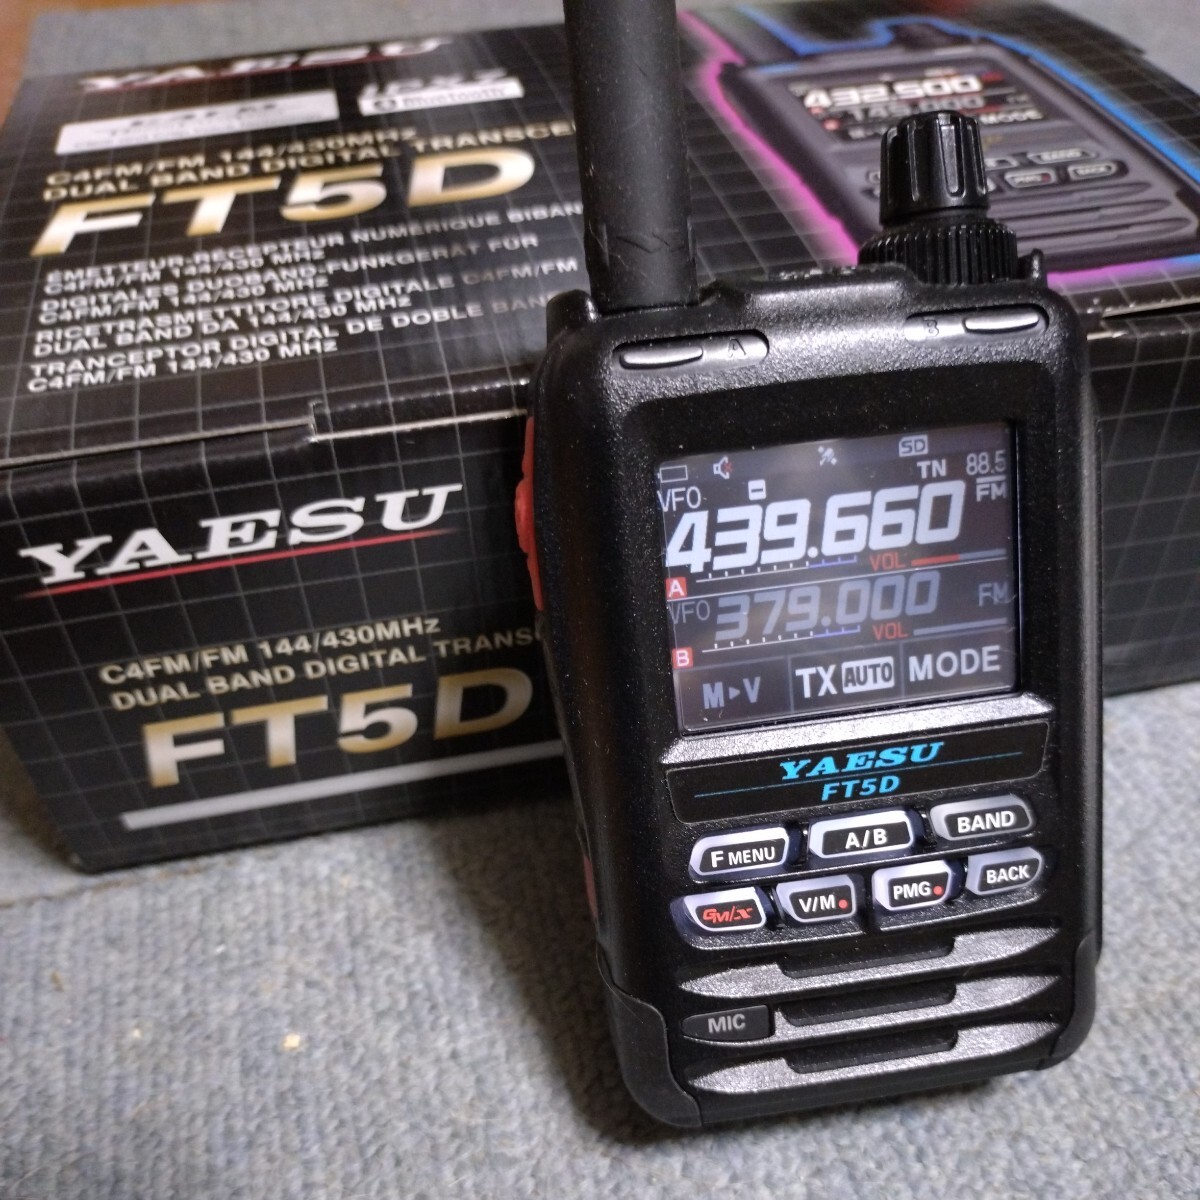 YAESU transceiver FT5D C4FM FM dual band option number point attaching .